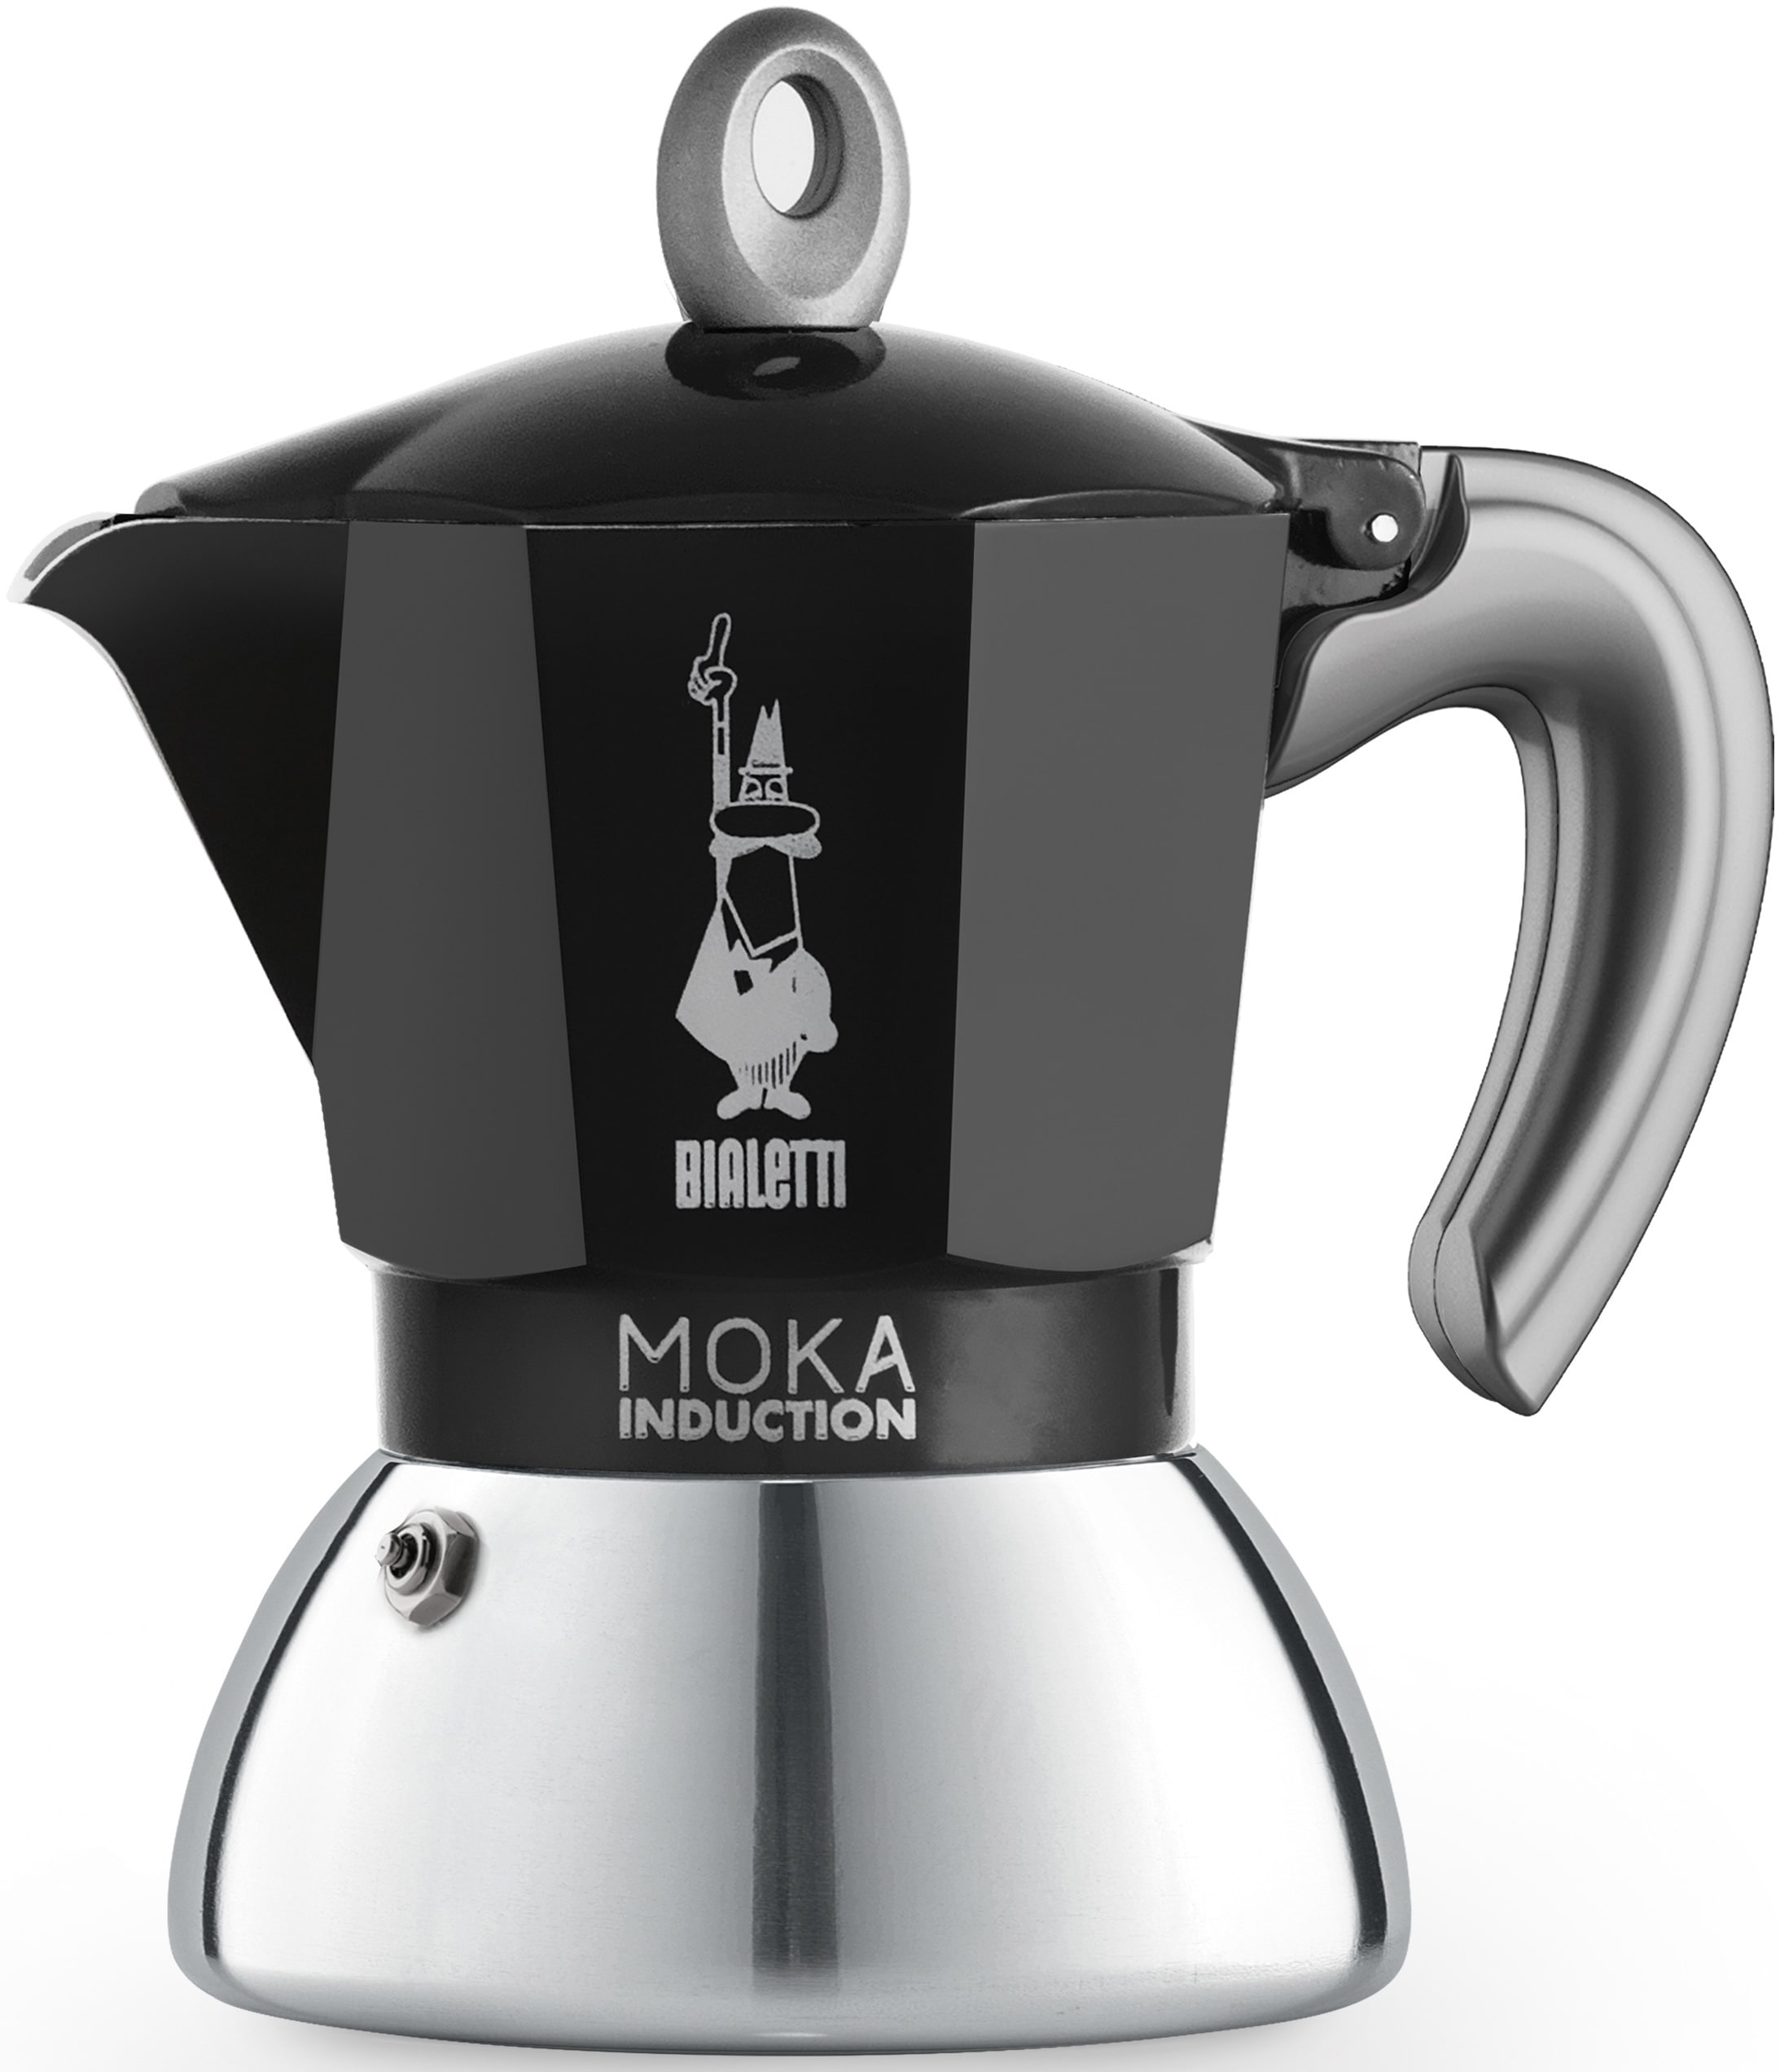 BIALETTI Espressokocher "Moka Induktion", 0,09 l Kaffeekanne, Induktionsgeeignet